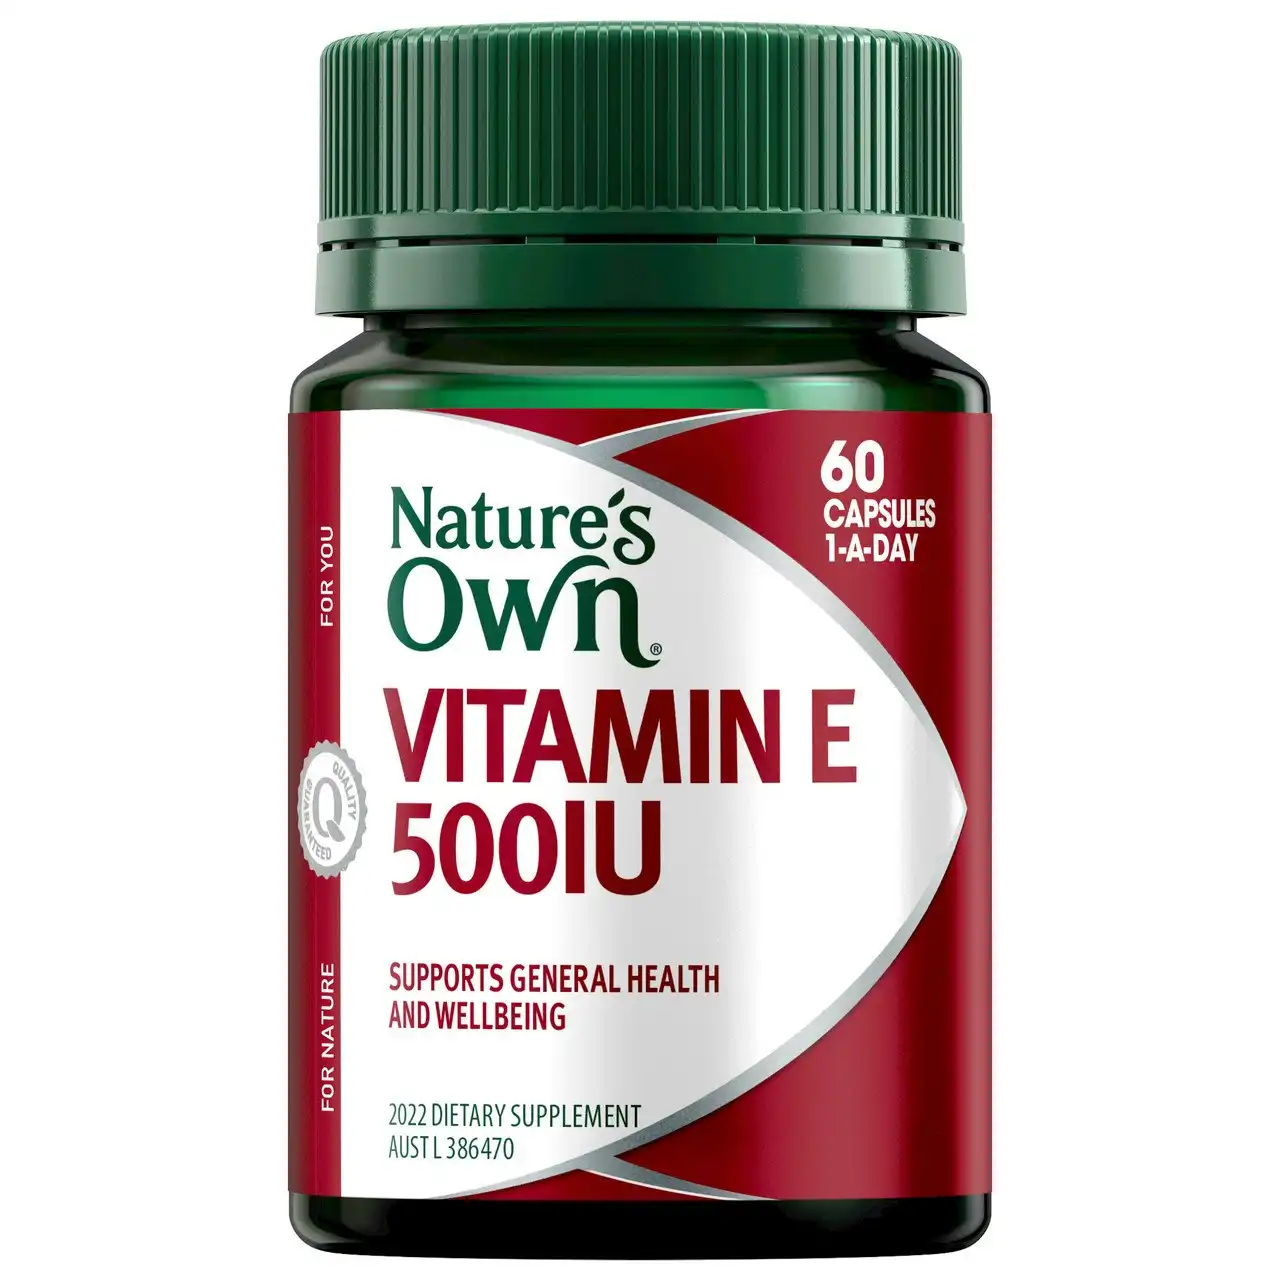 Nature's Own Vitamin E 500IU 60 Capsules